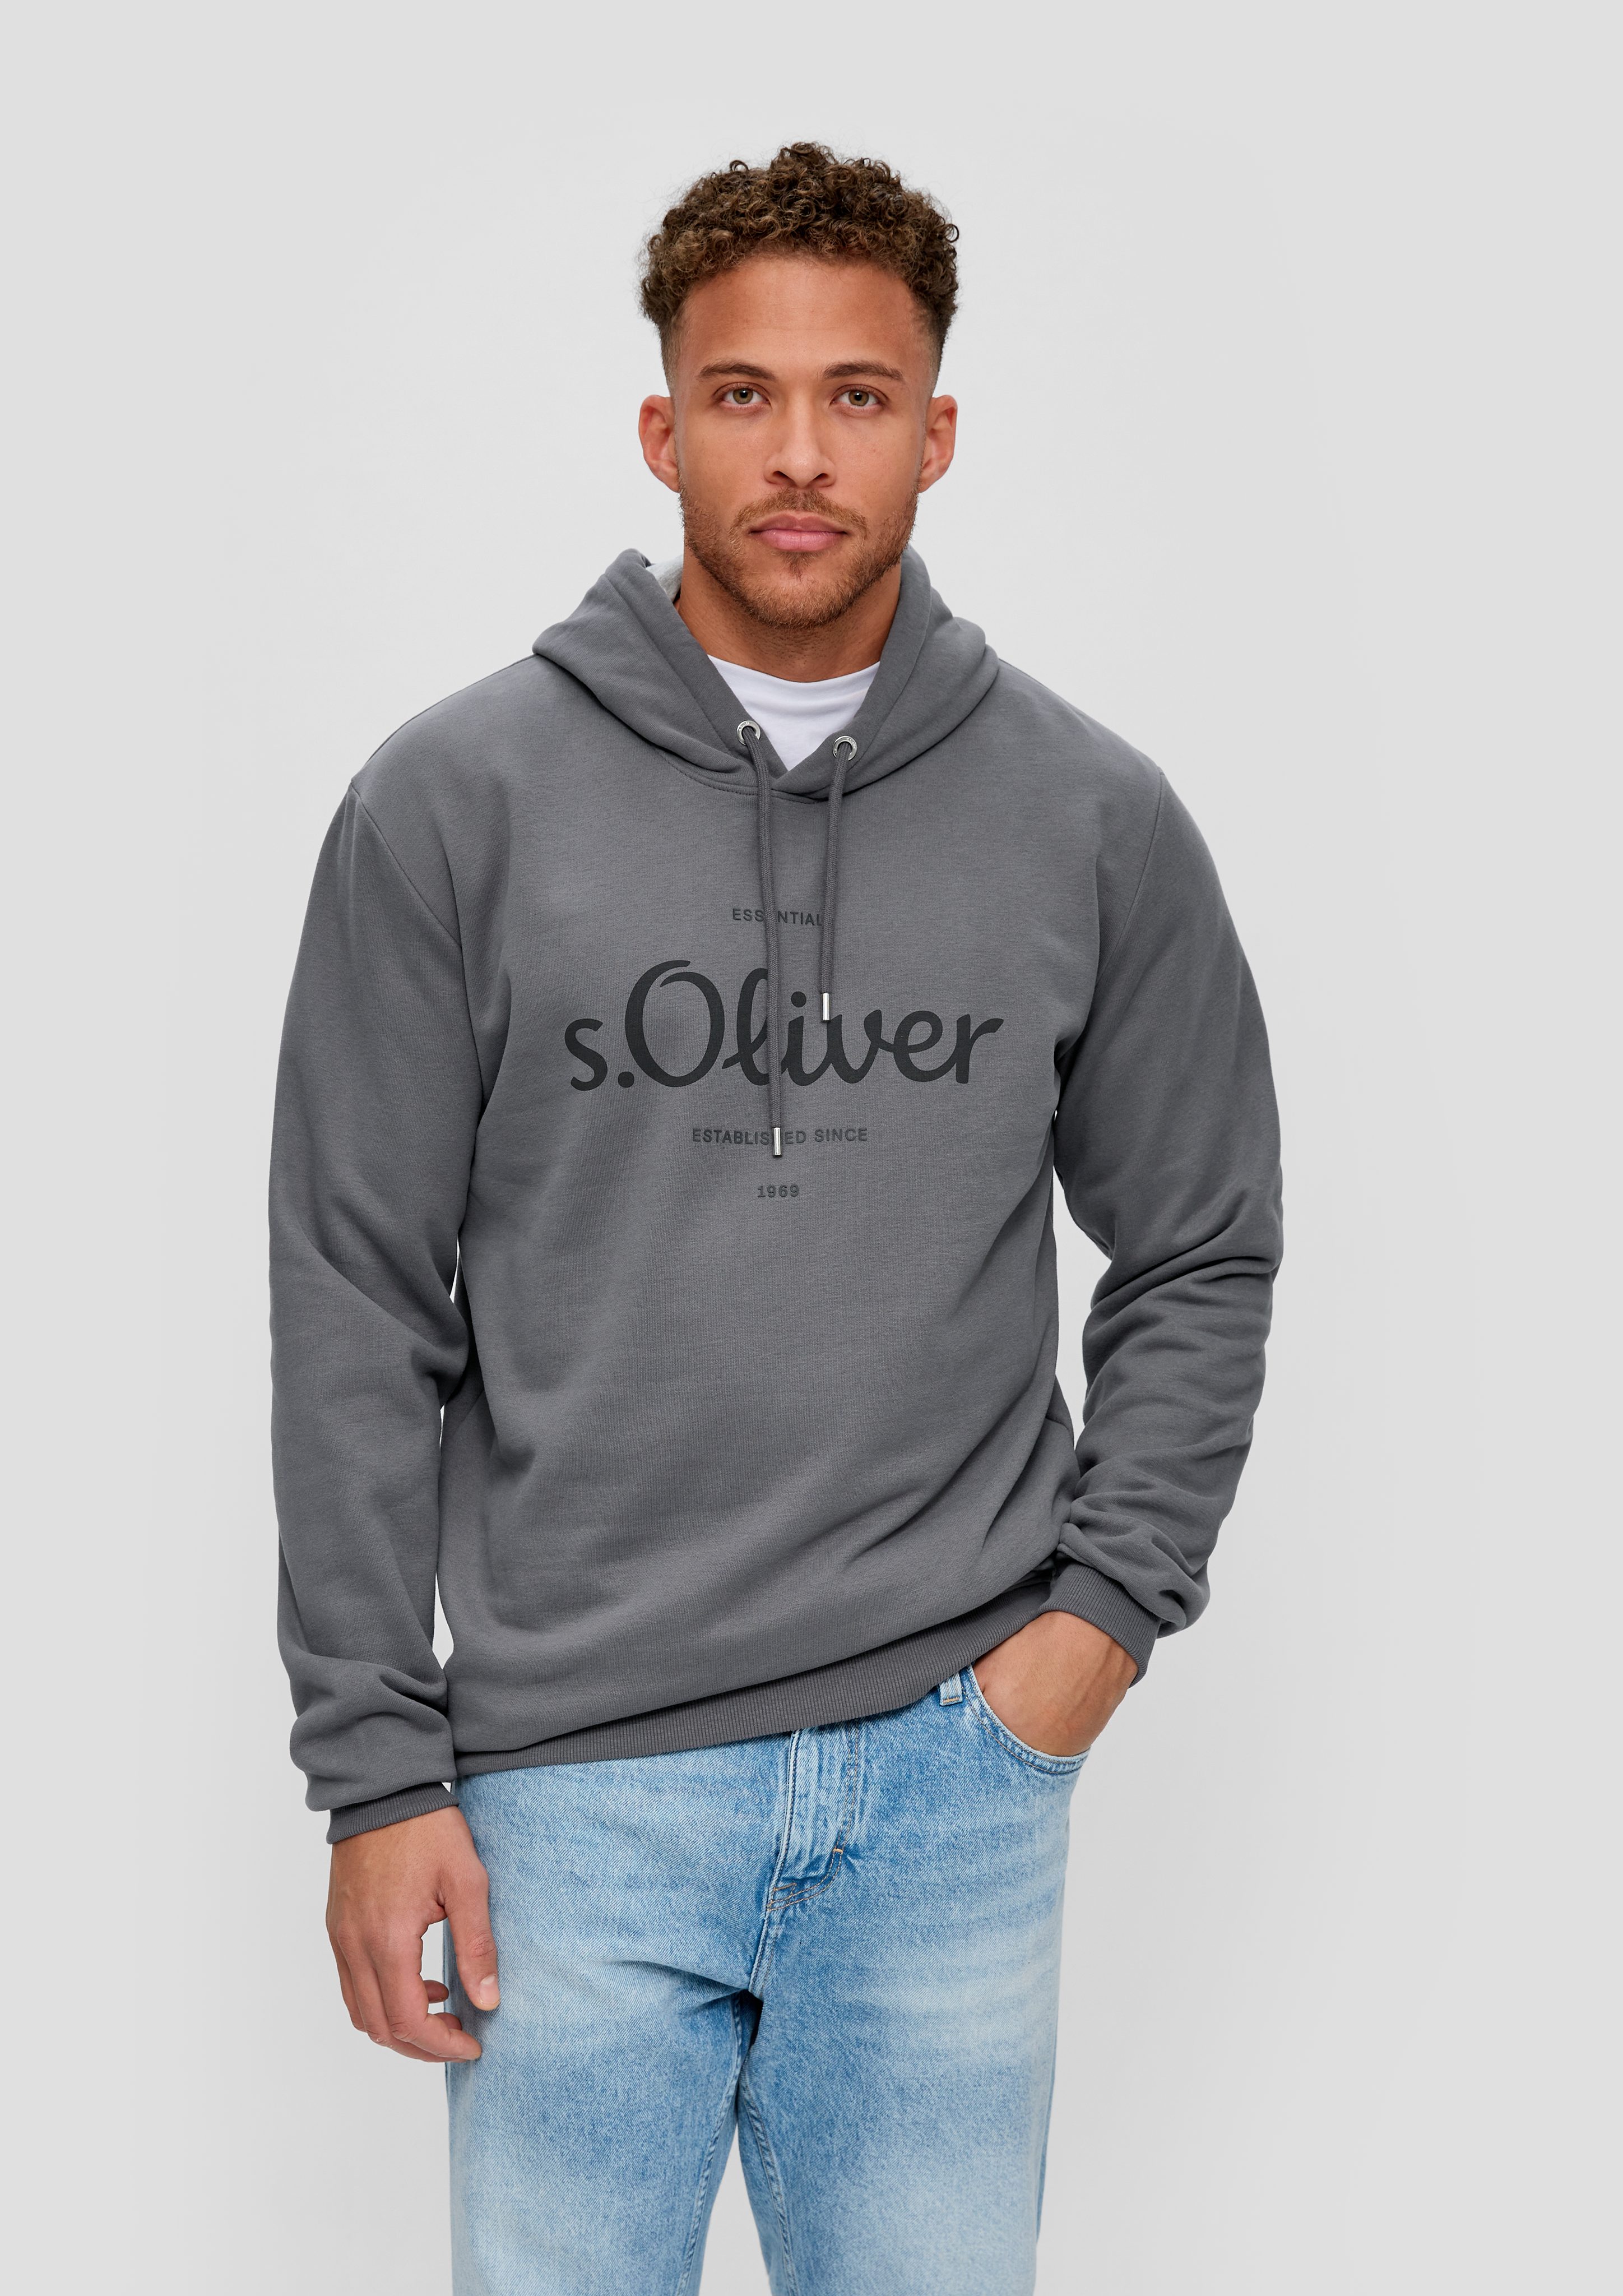 s.Oliver Sweatshirt Sweatshirt mit Kapuze dunkelgrau